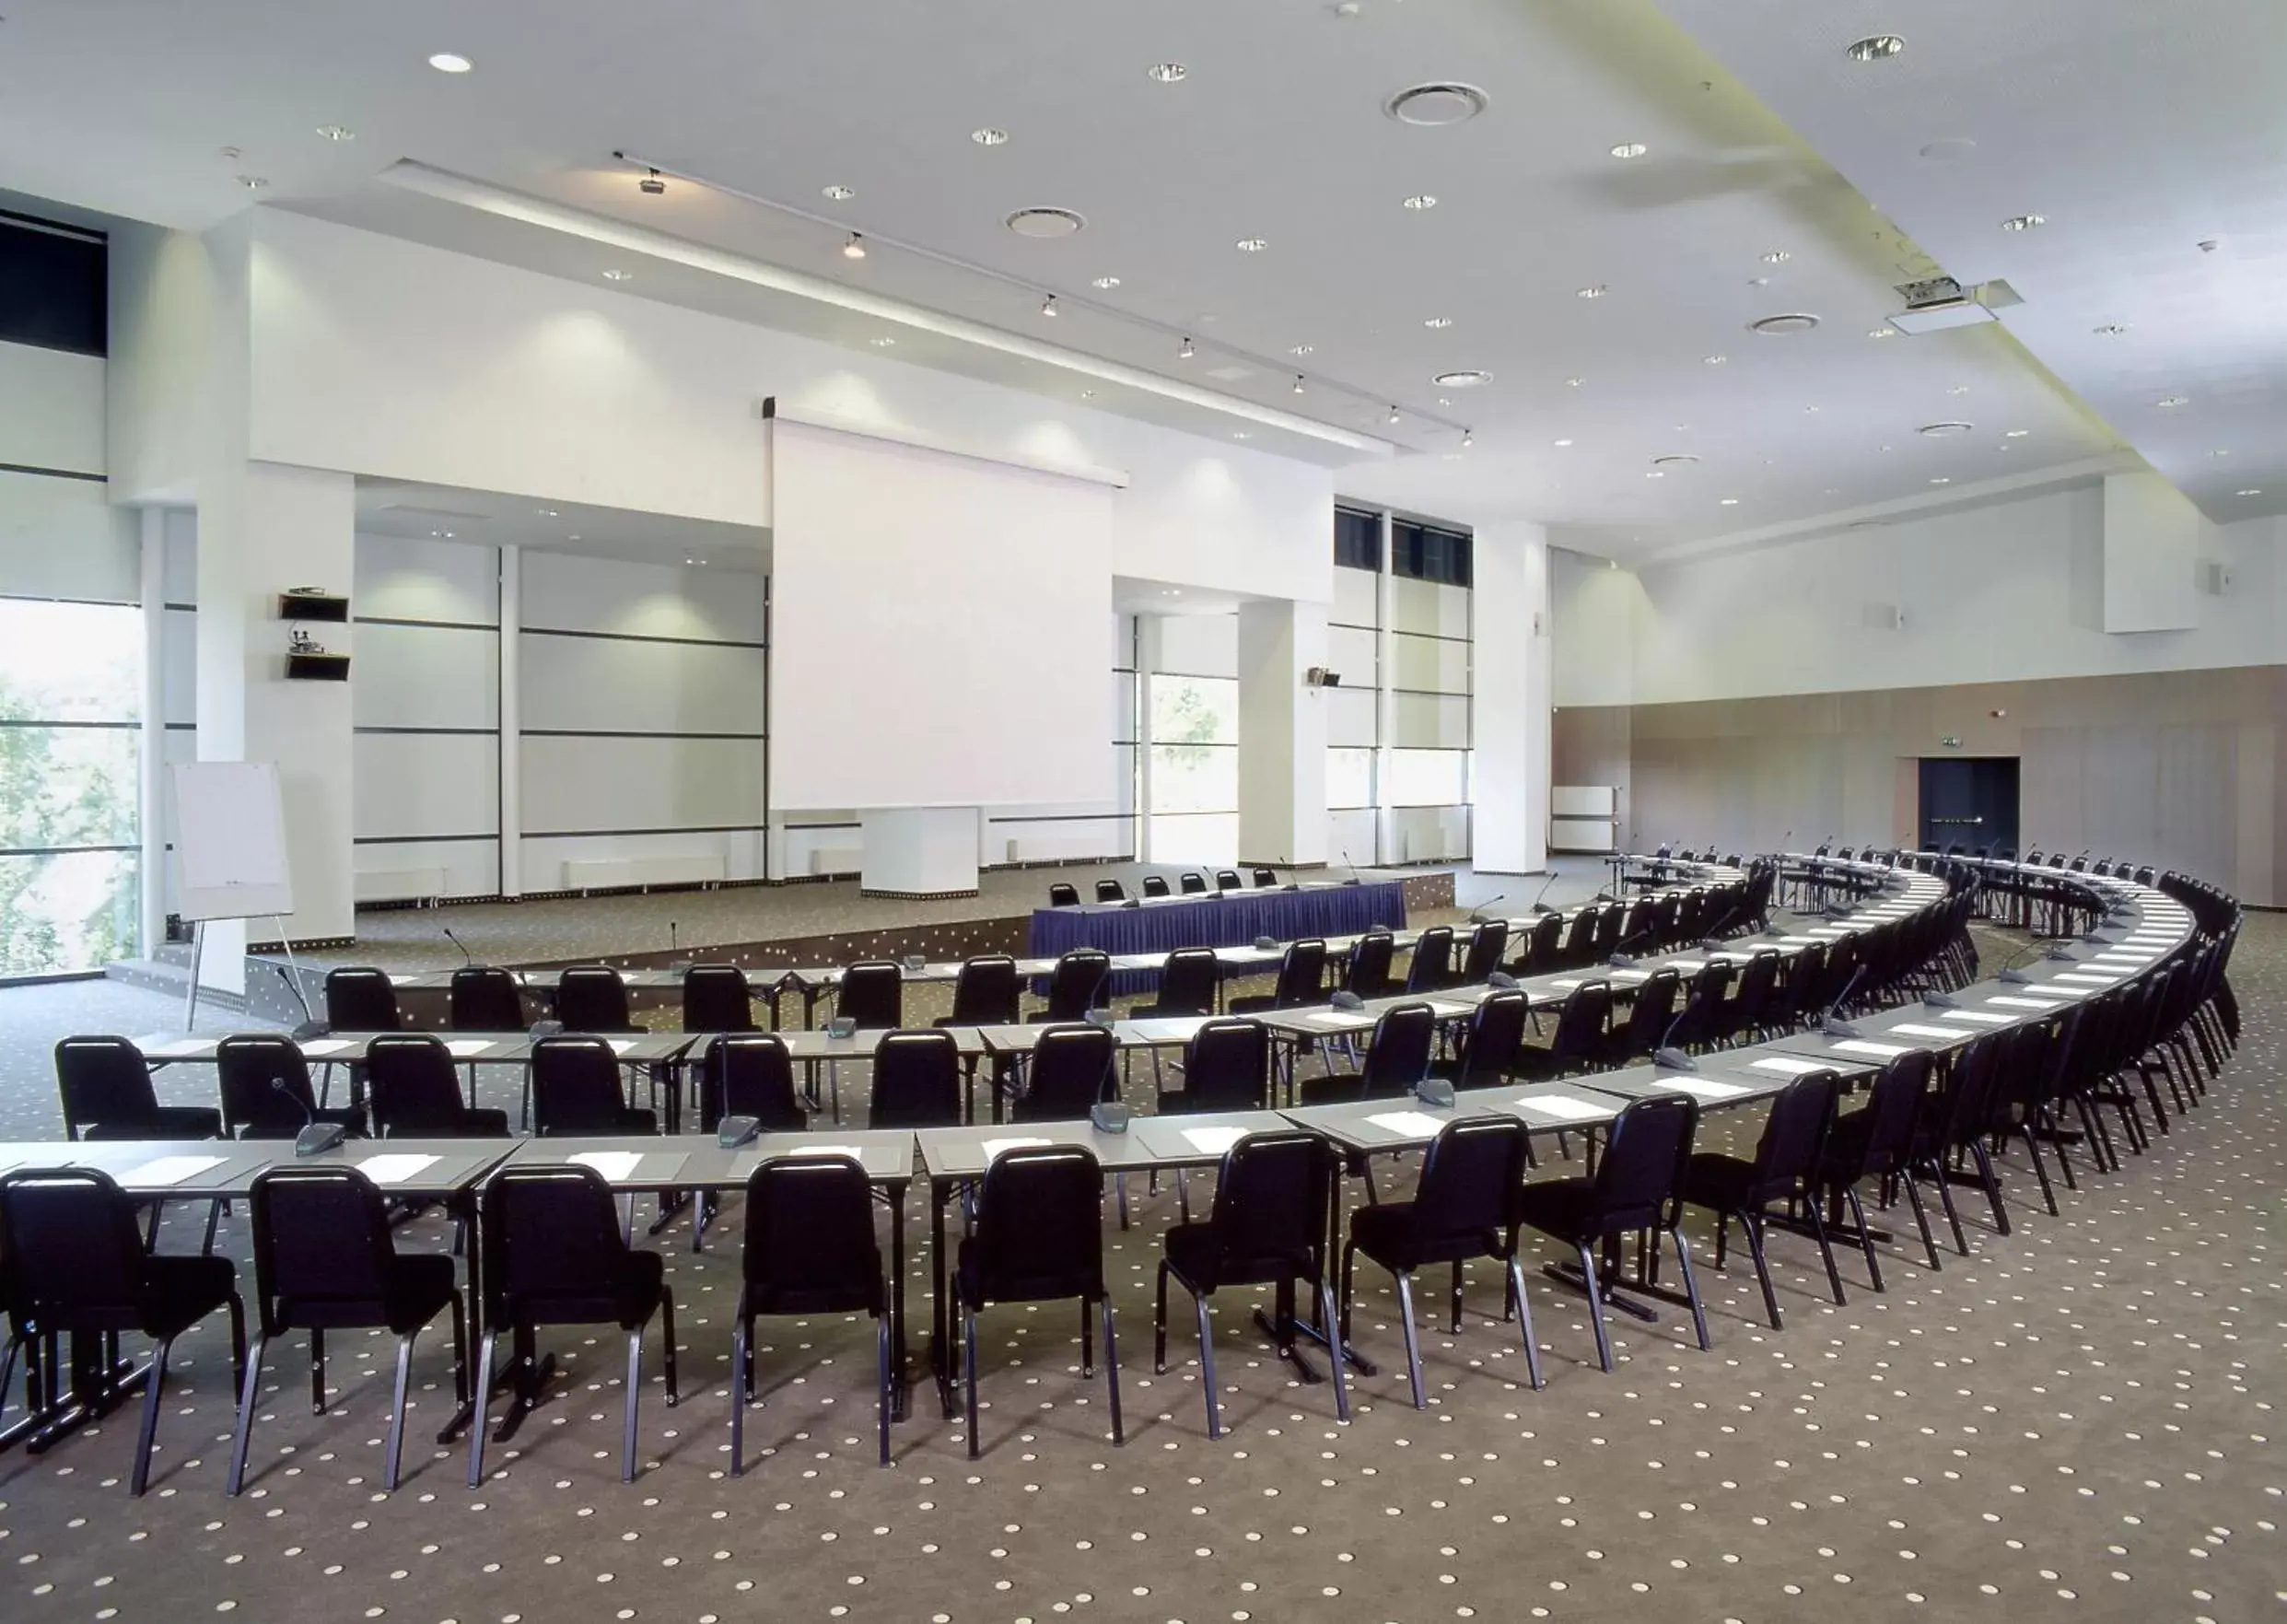 Meeting/conference room in Radisson Blu Hotel Lietuva